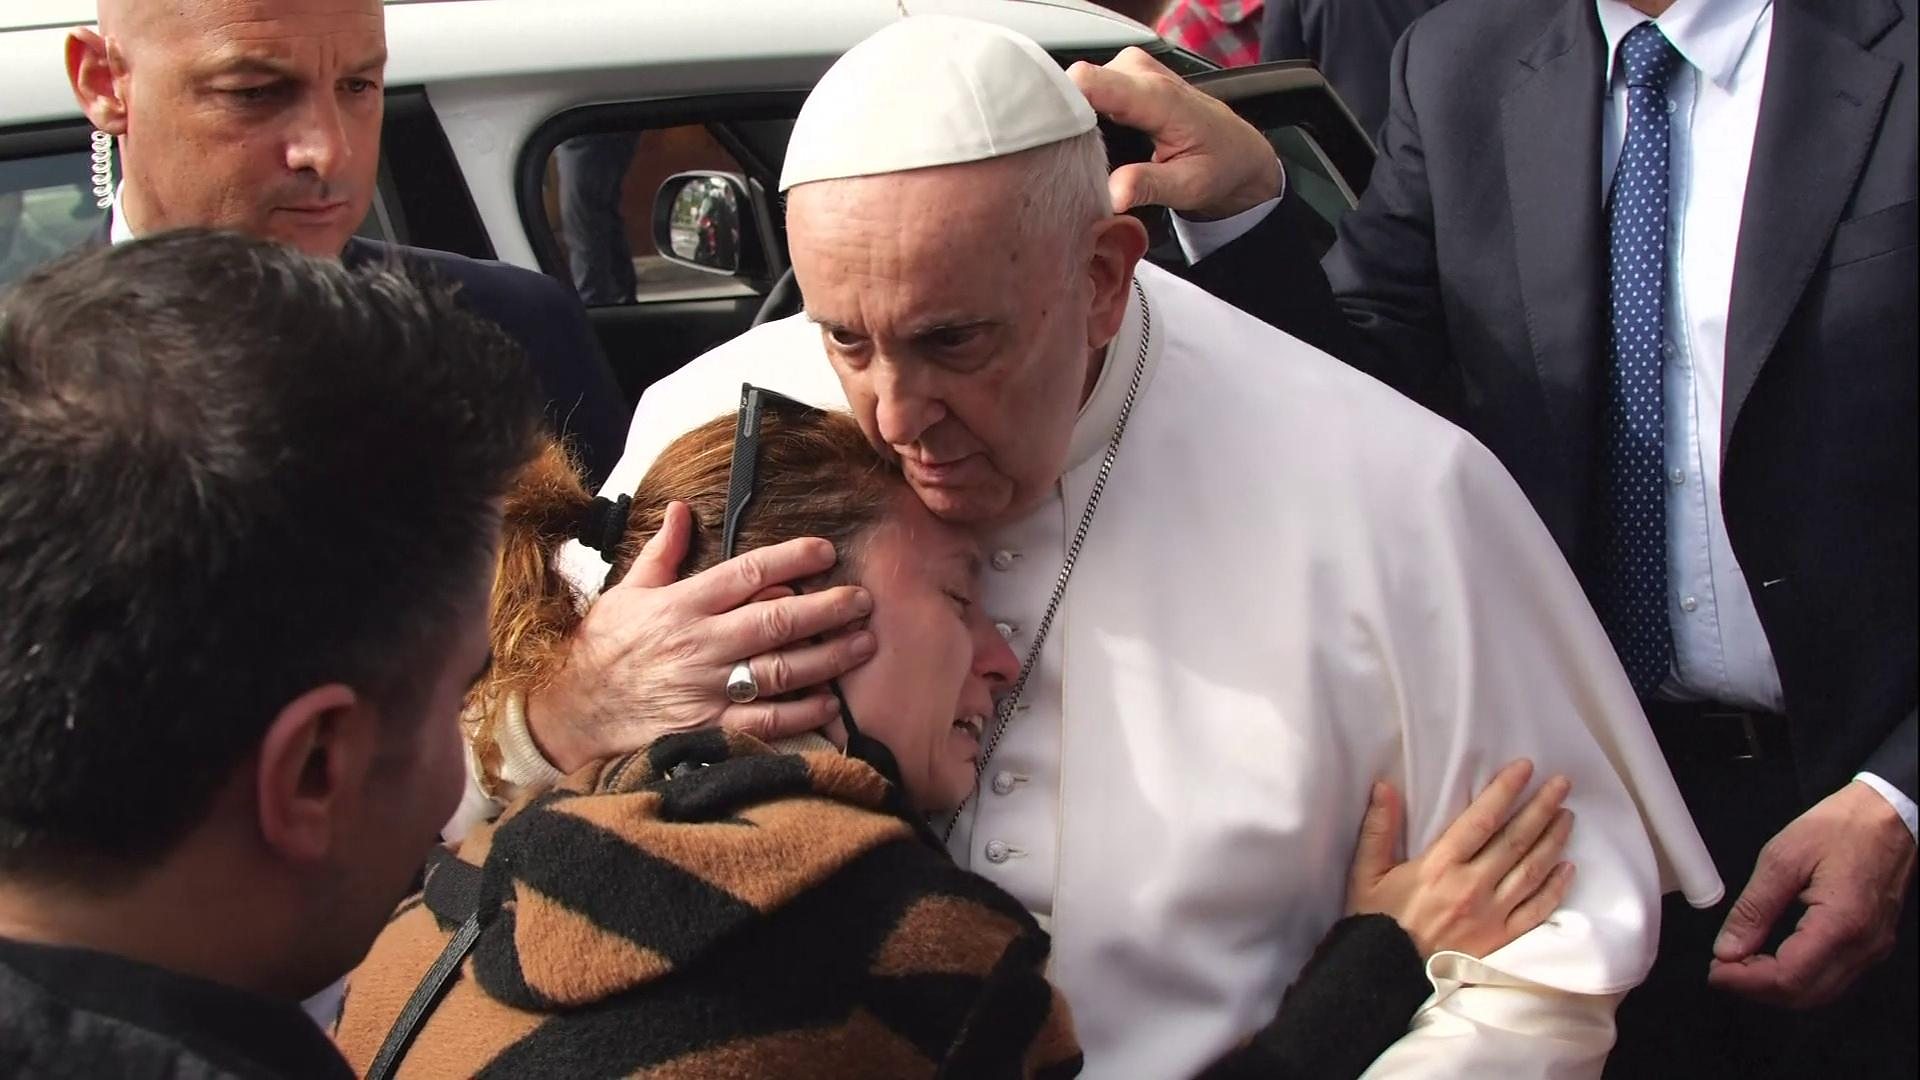 Watch: Well wishers in tears as Pope leaves hospital